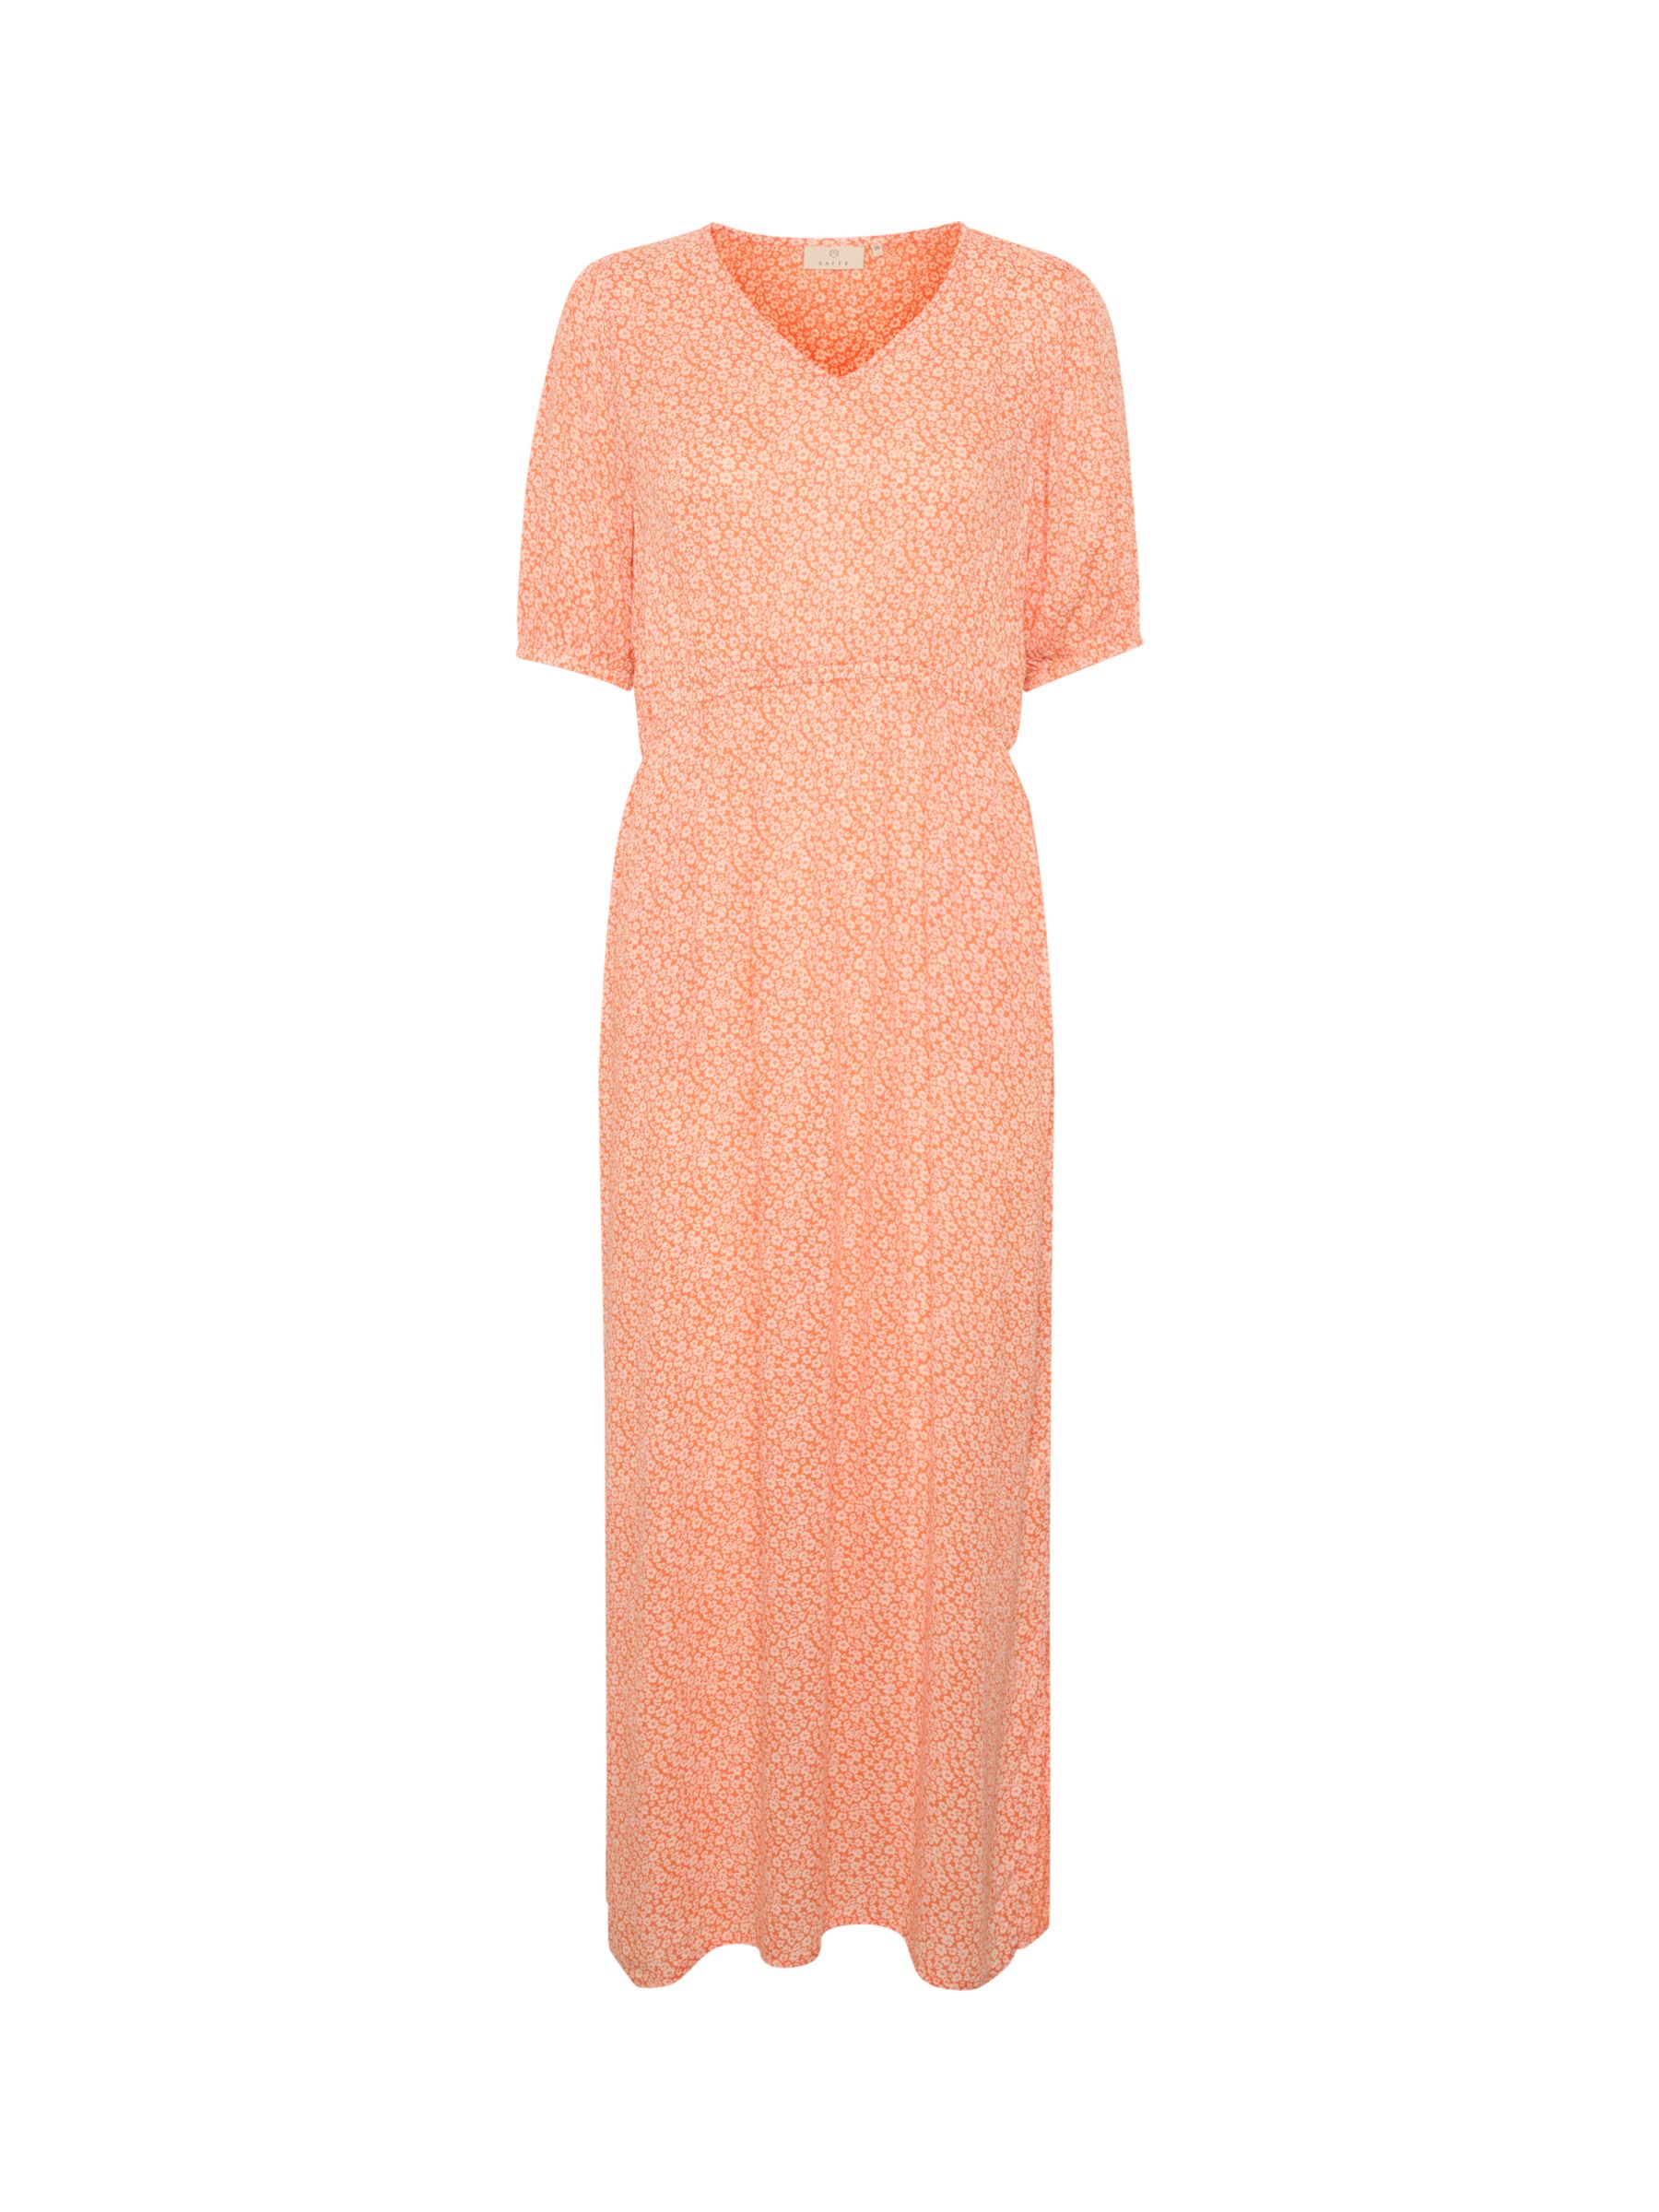 Buy KAFFE Isolde Amber Maxi Dress, Vermillion/Antique Online at johnlewis.com